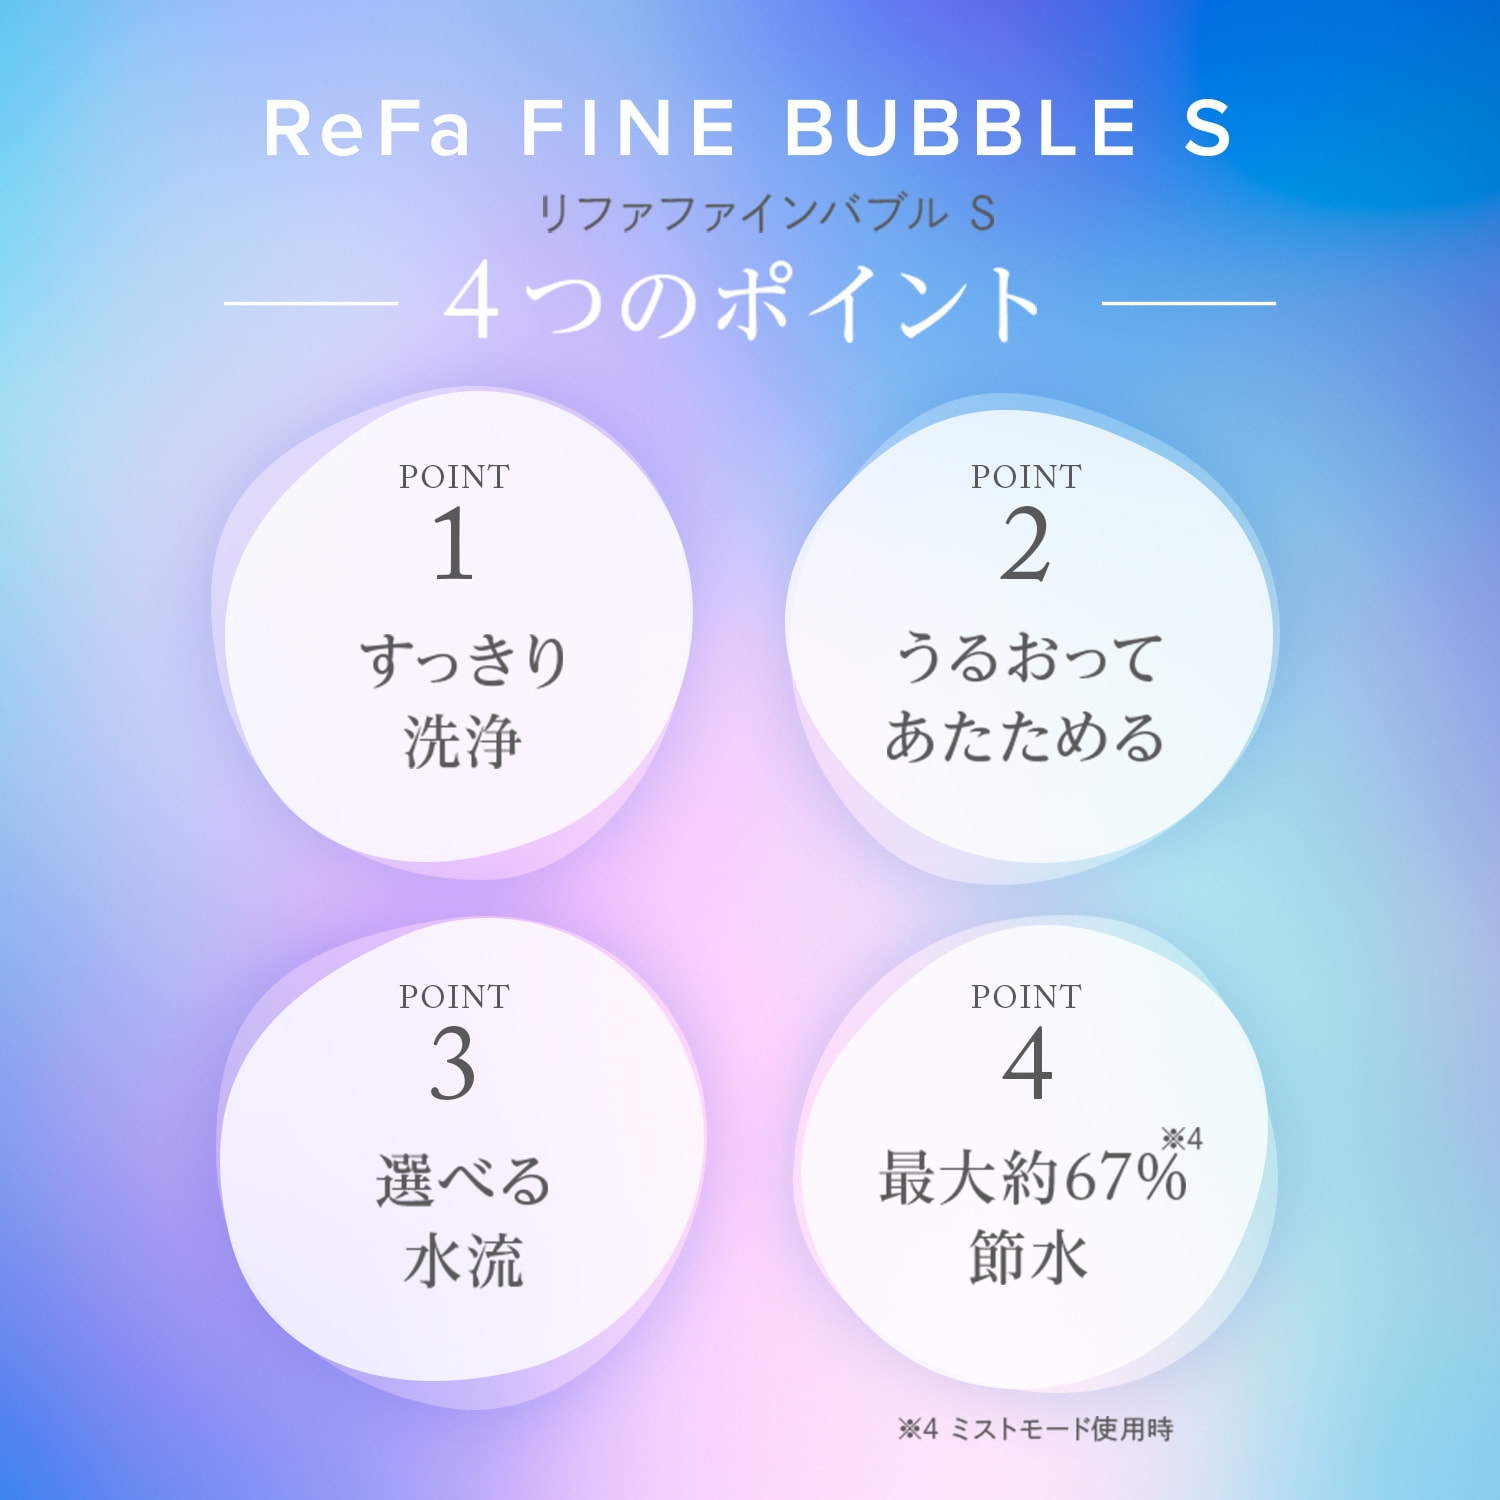 ReFa FINE BUBBLE S | Giftpad egift